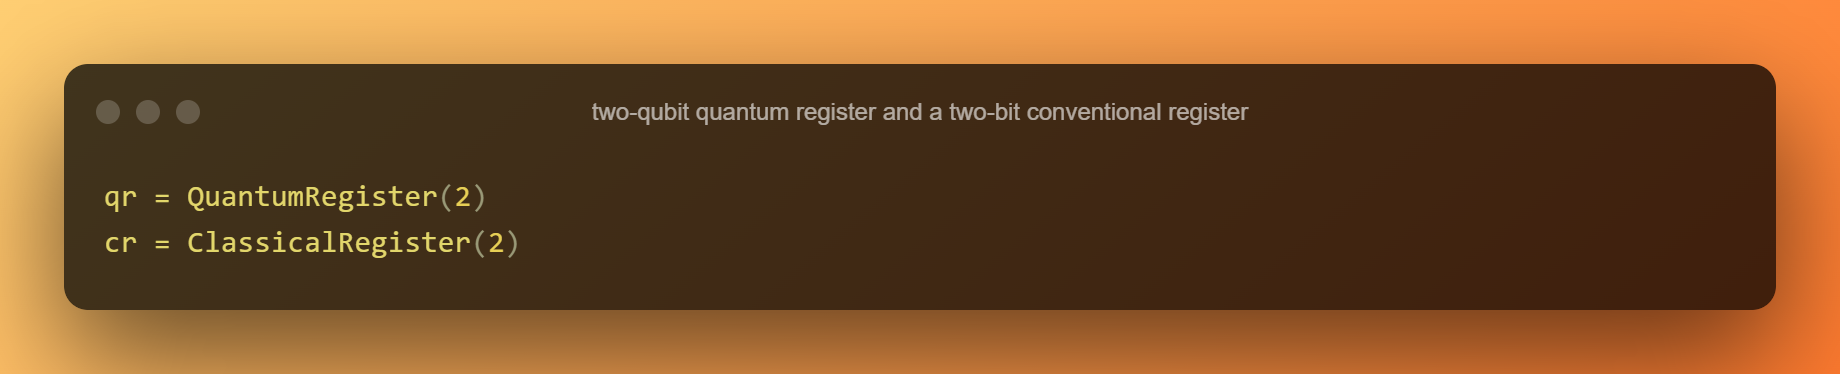 Two Qubit Quantum Register And A Two Bit Conventional Register